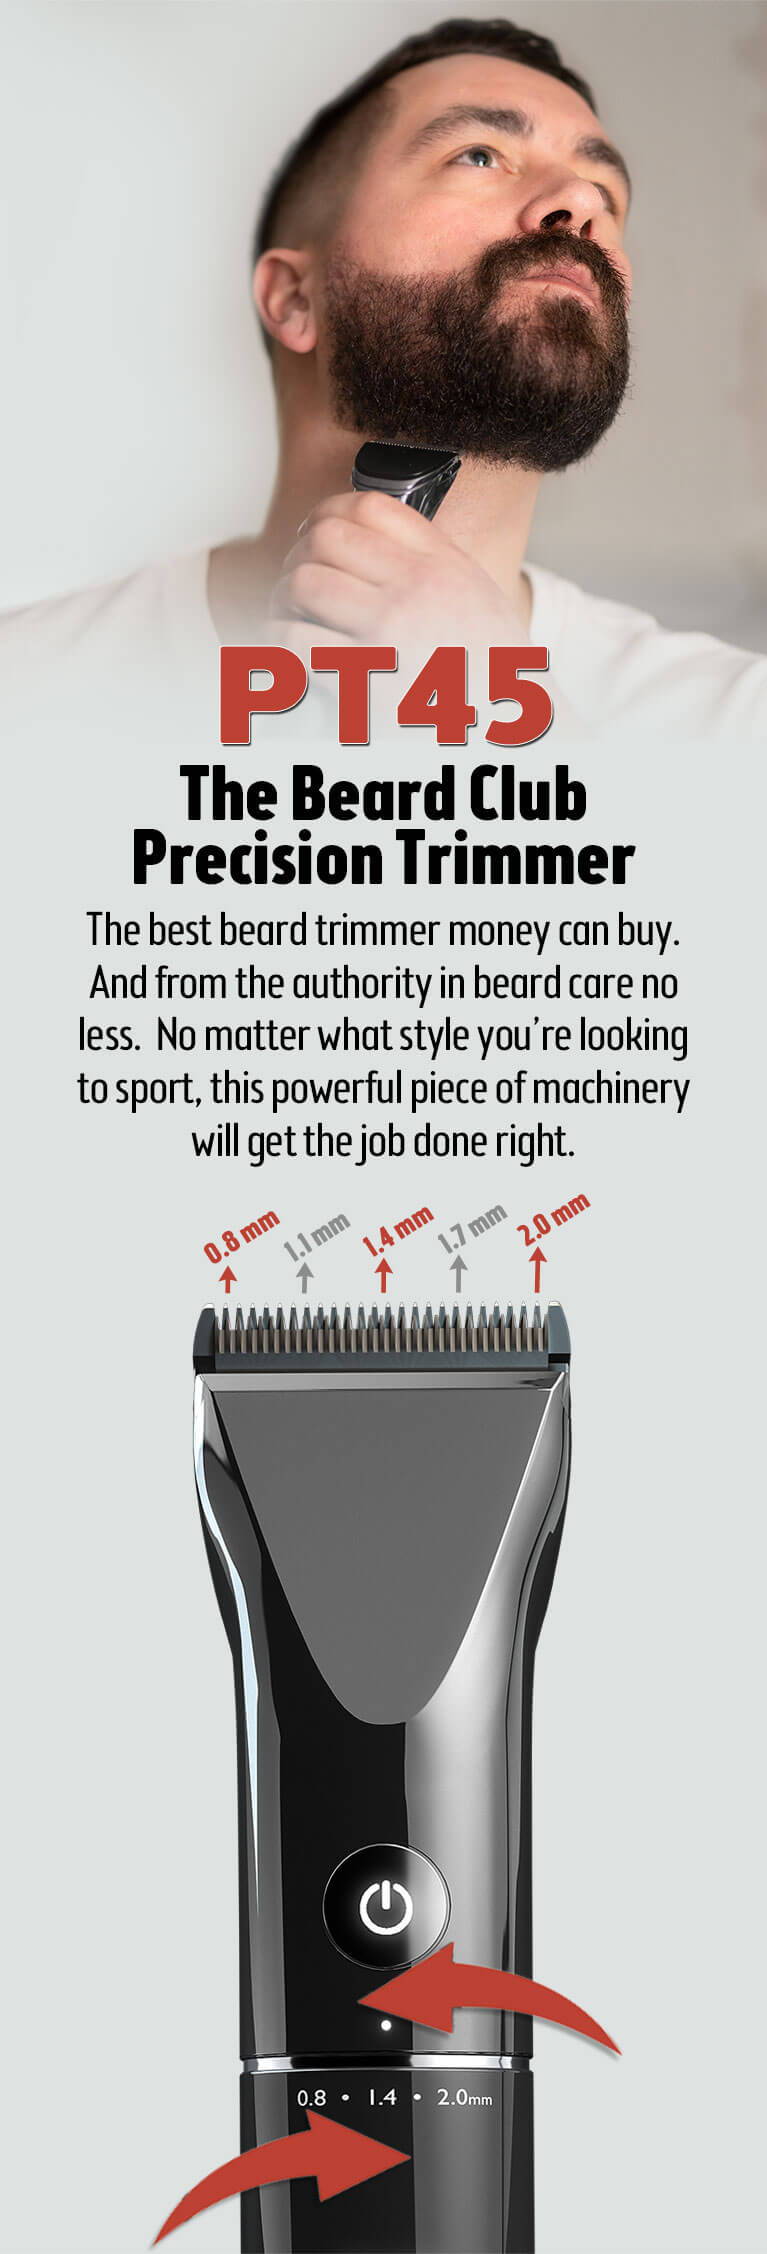 beard club pt 45 review